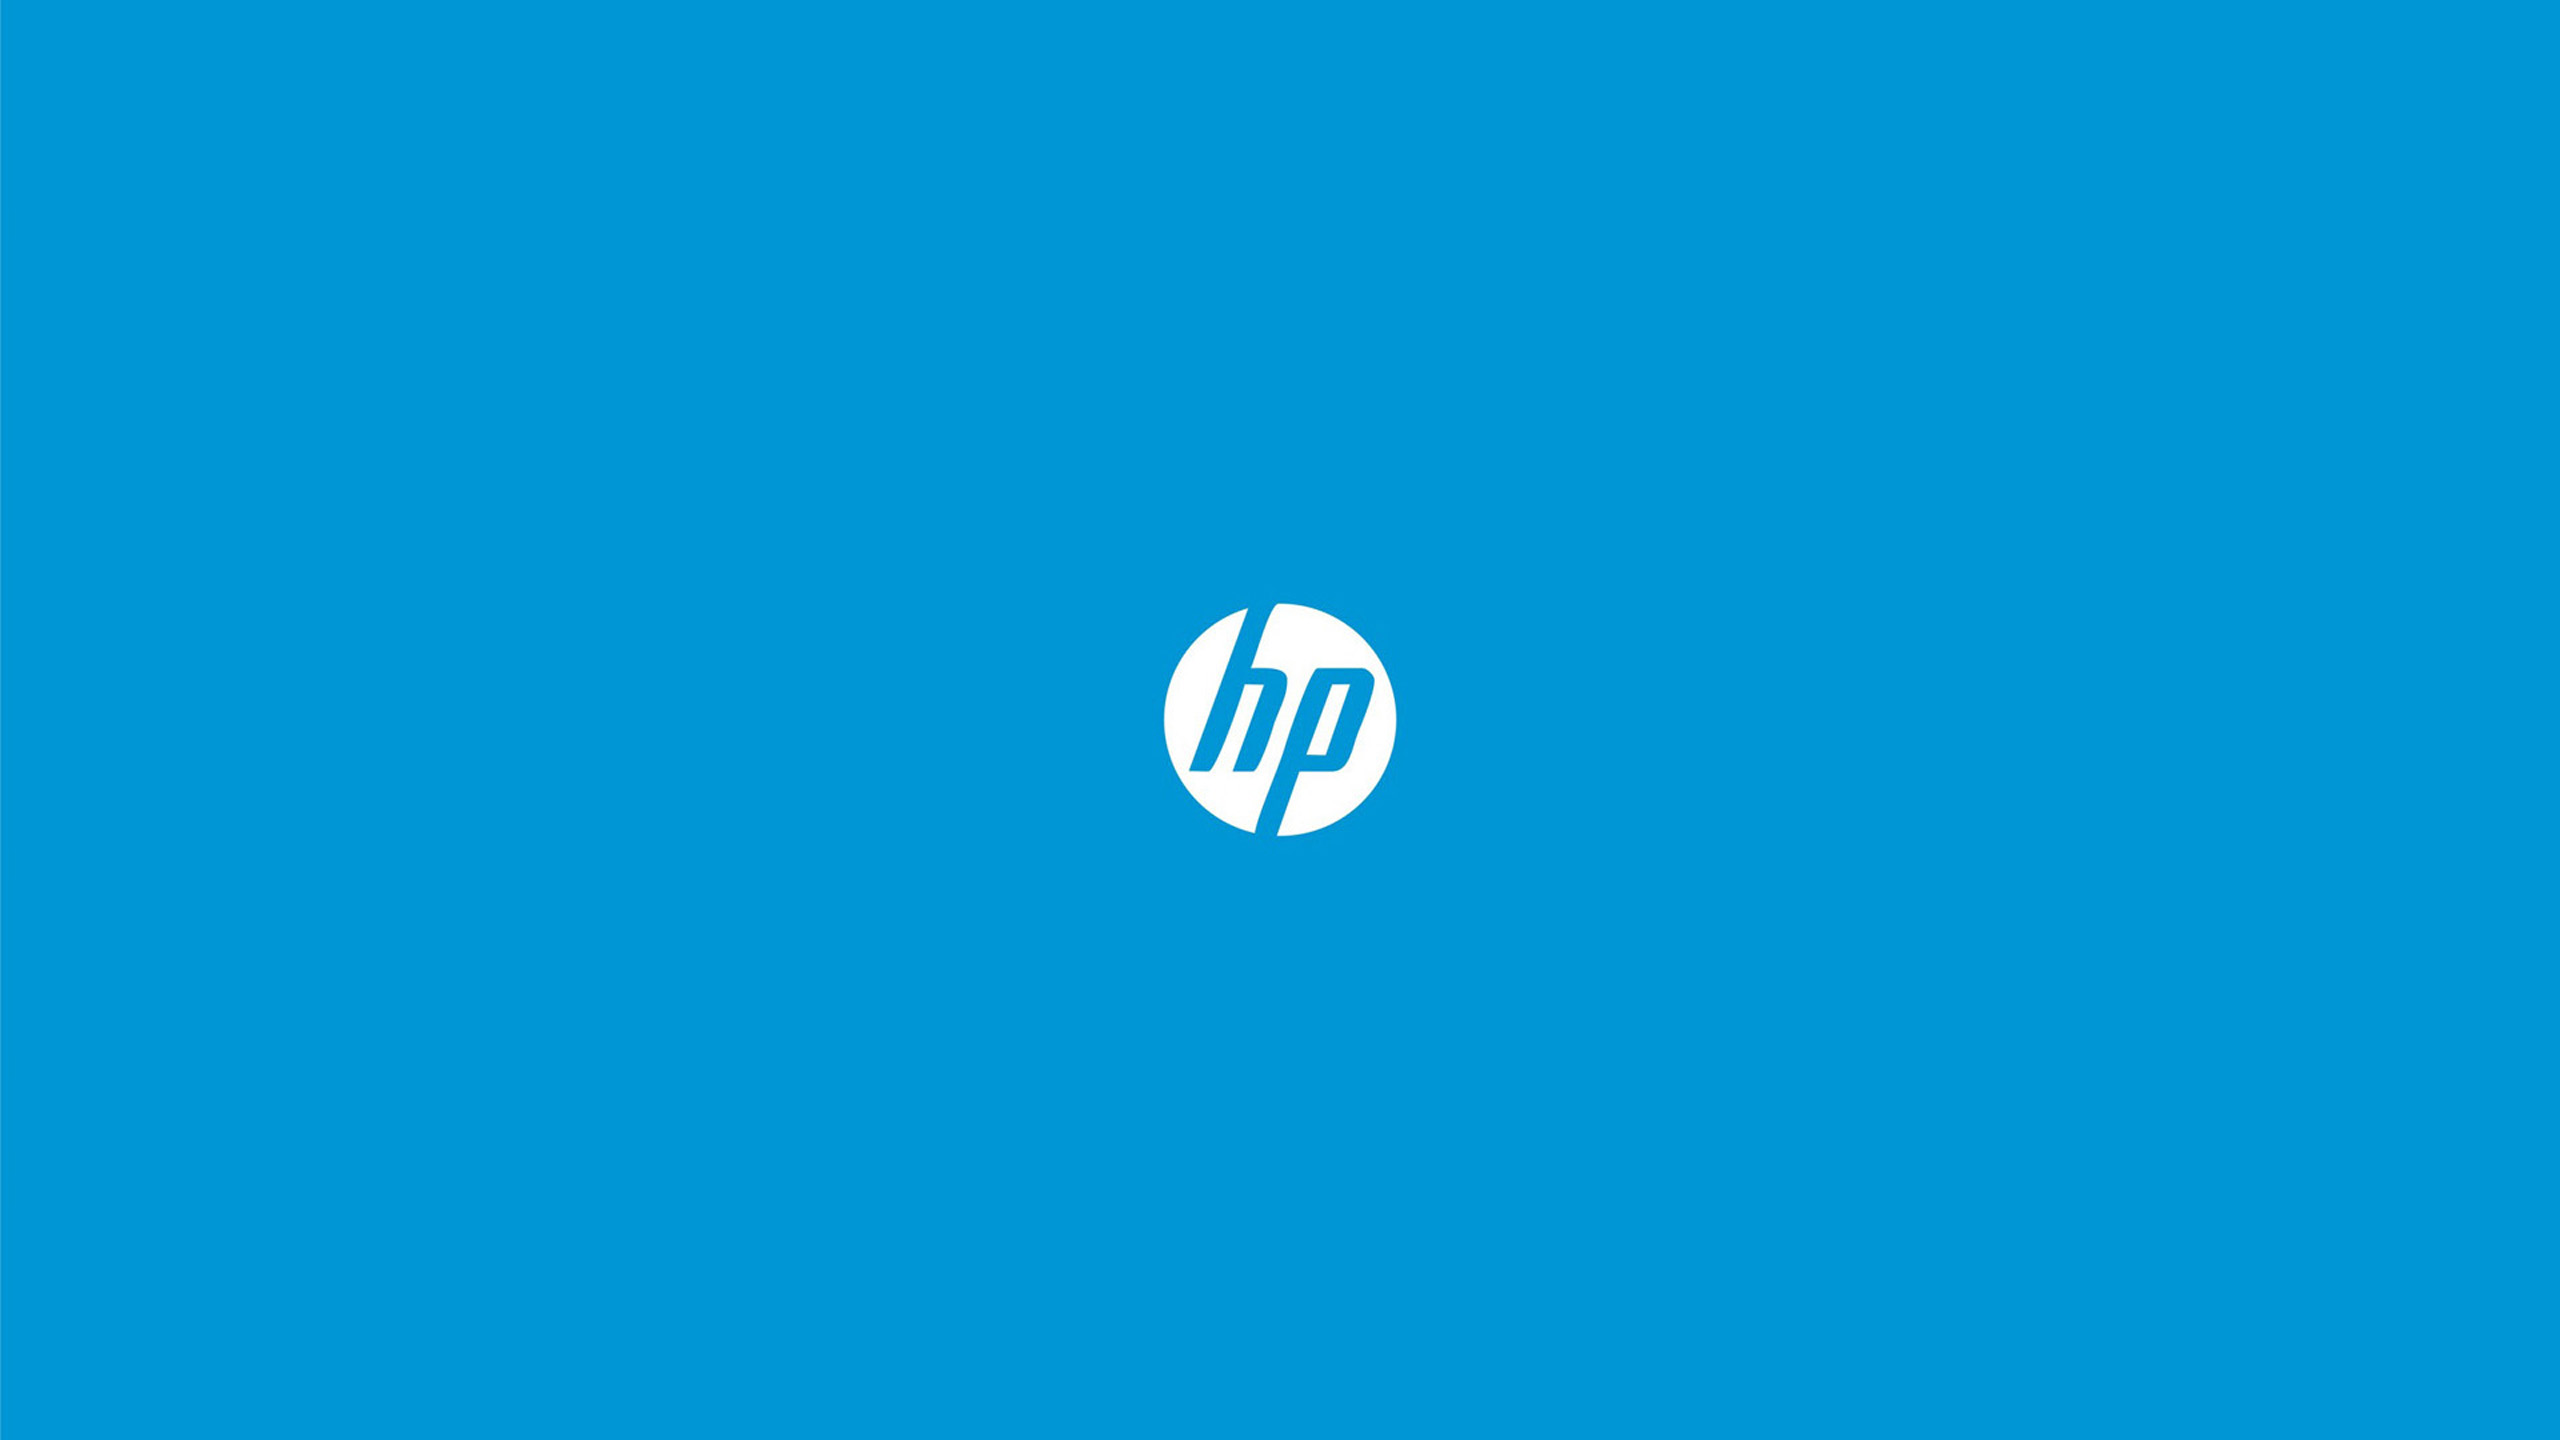 HP Logo Wallpapers | PixelsTalk.Net